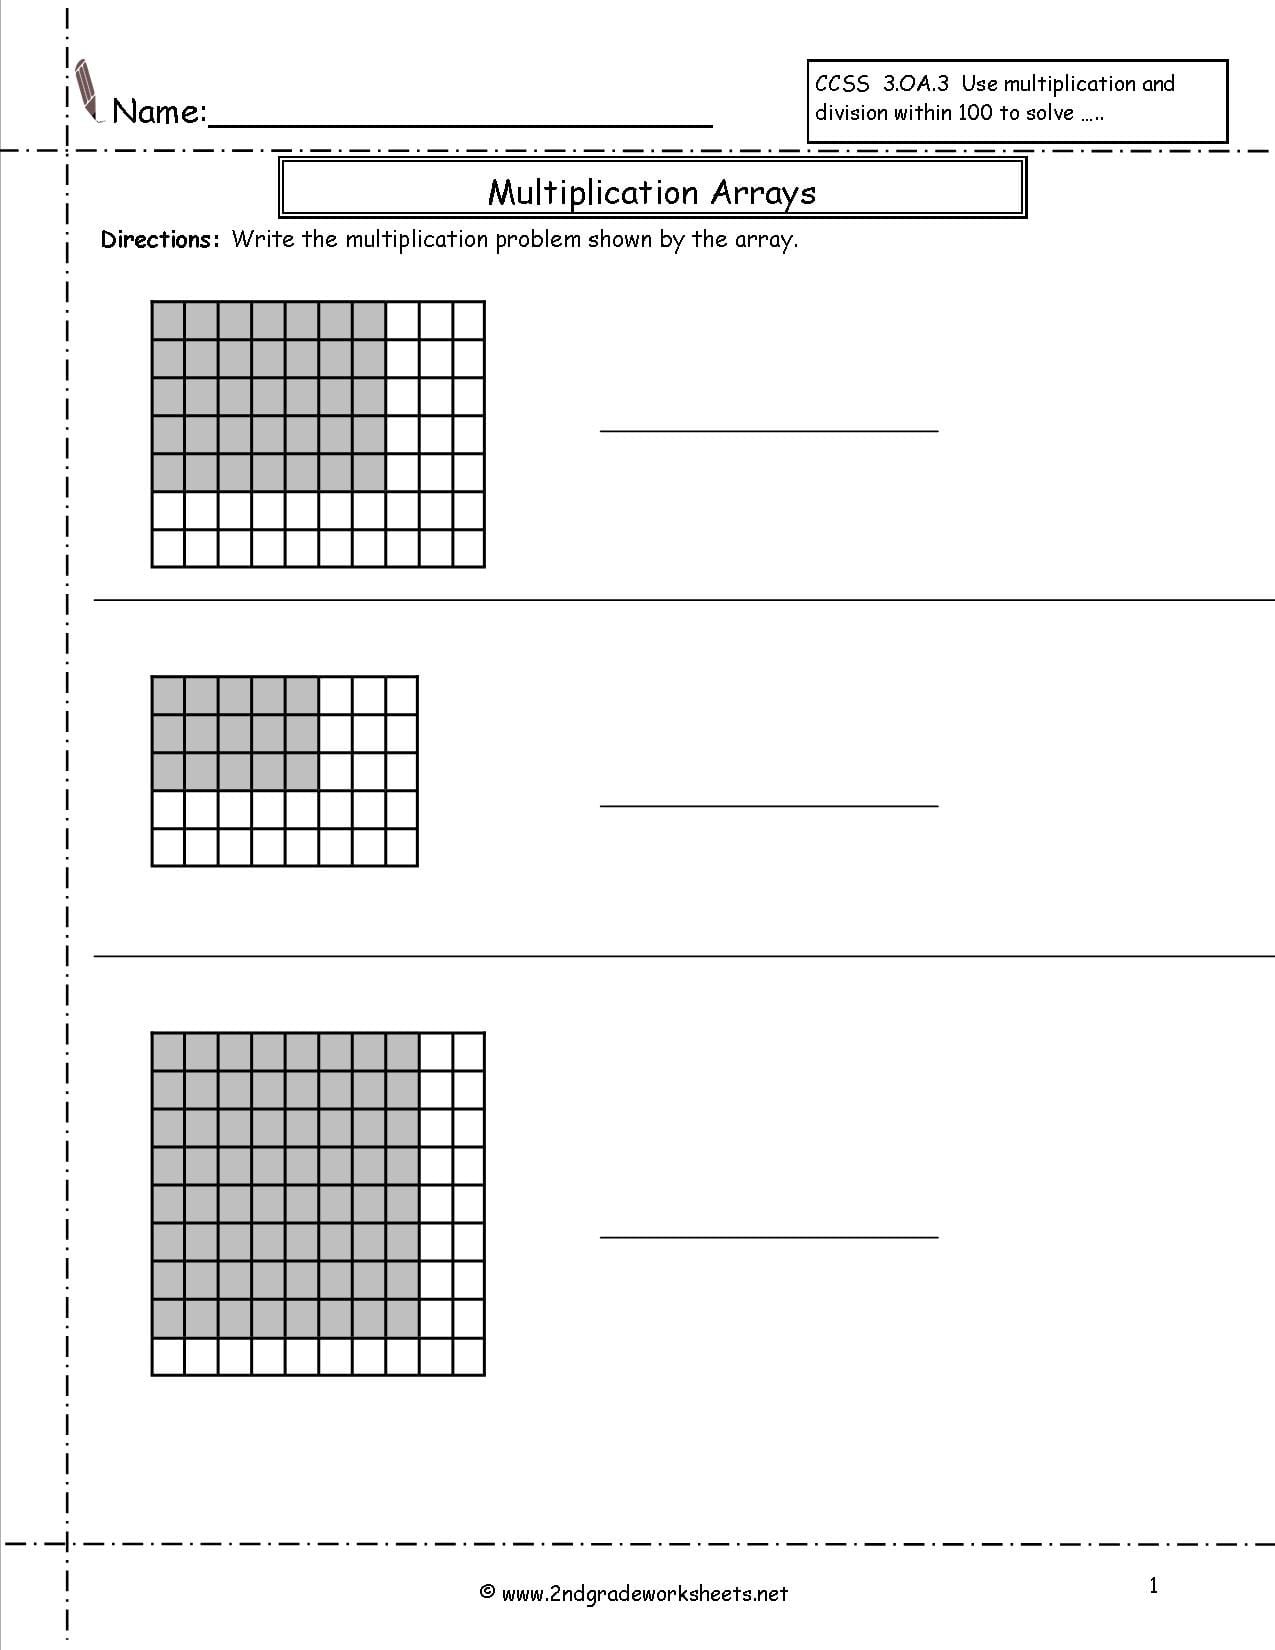 multiplication-arrays-worksheets-4th-grade-db-excel